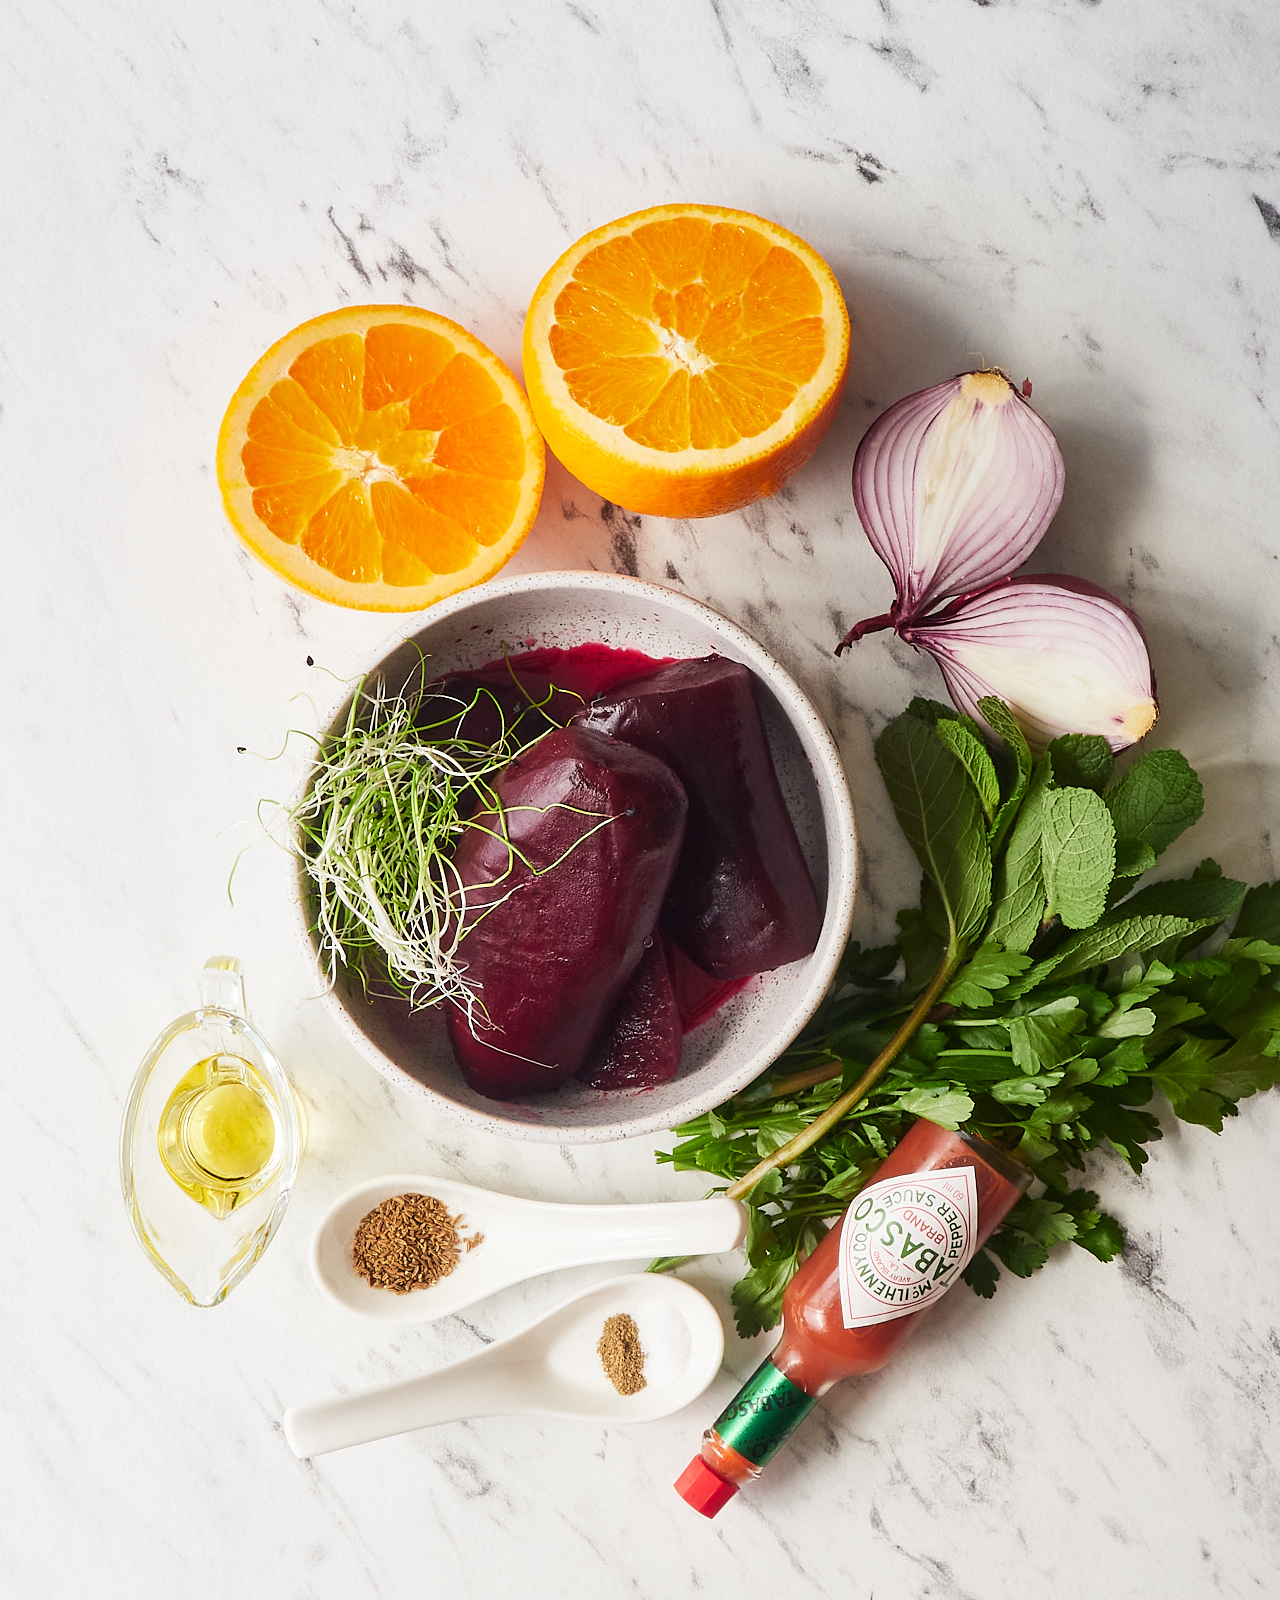 Beetroot Salad with Orange Dressing Ingredients